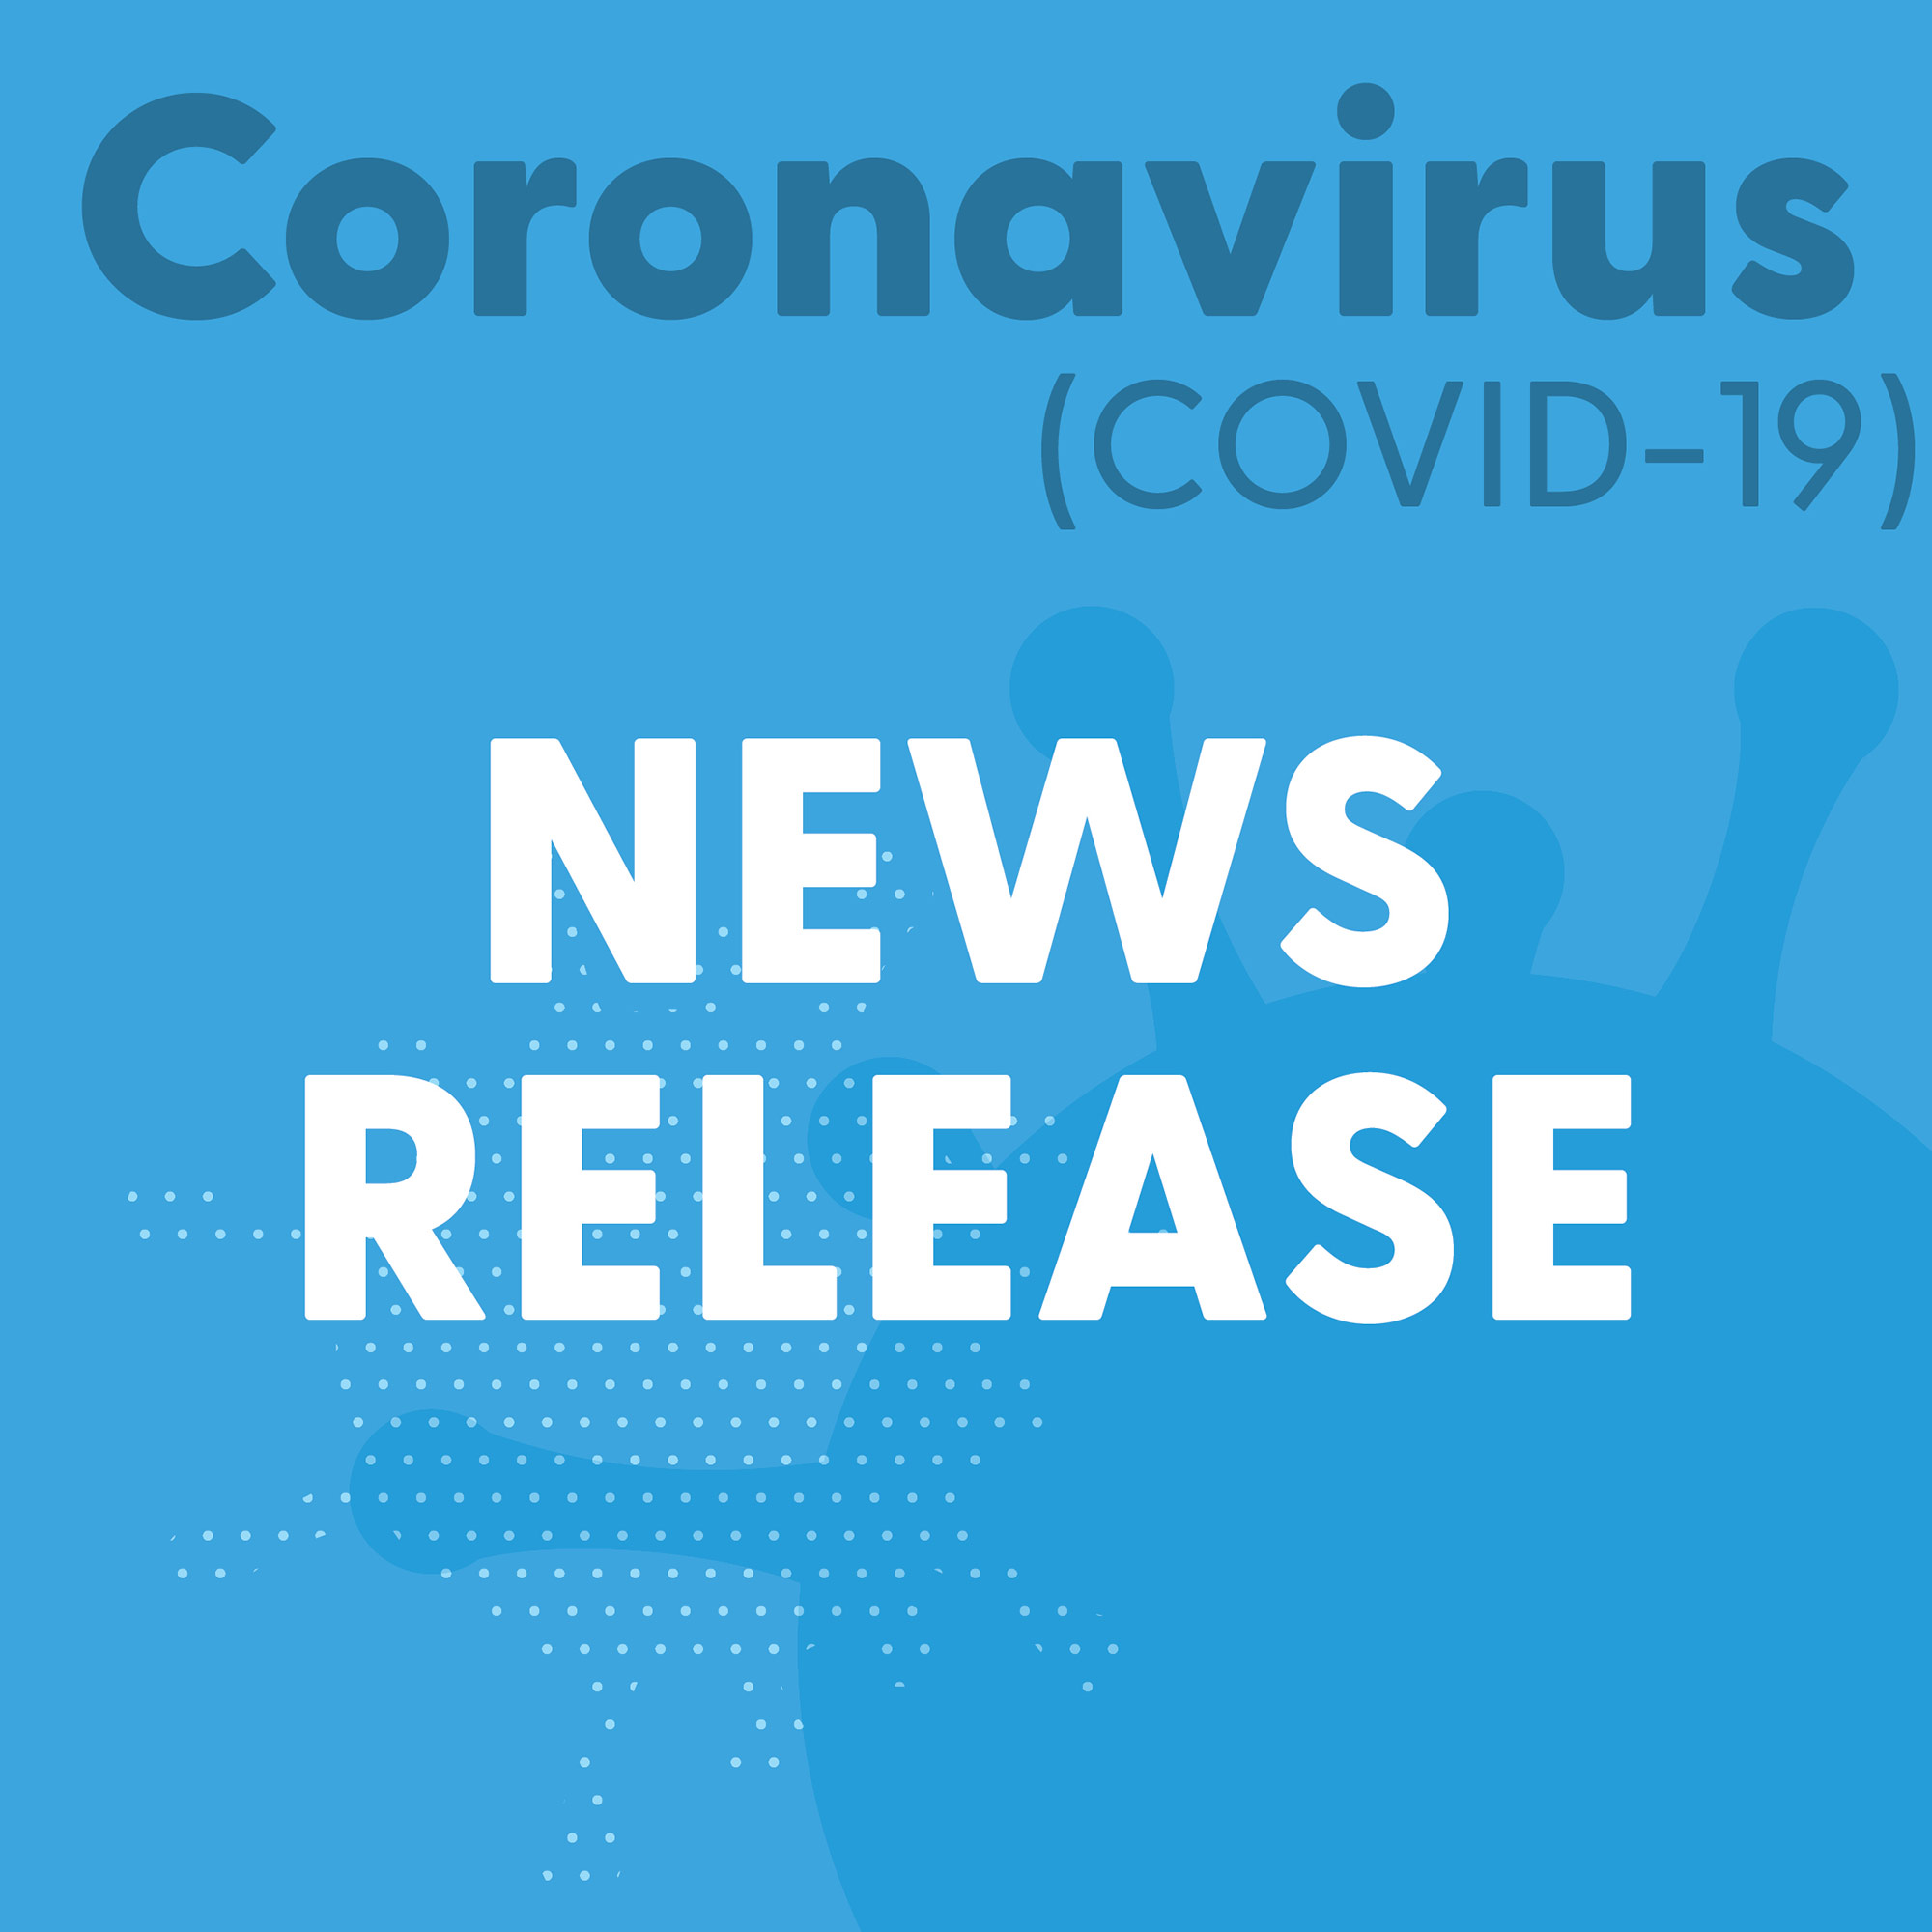 Coronavirus (COVID-19) News Release